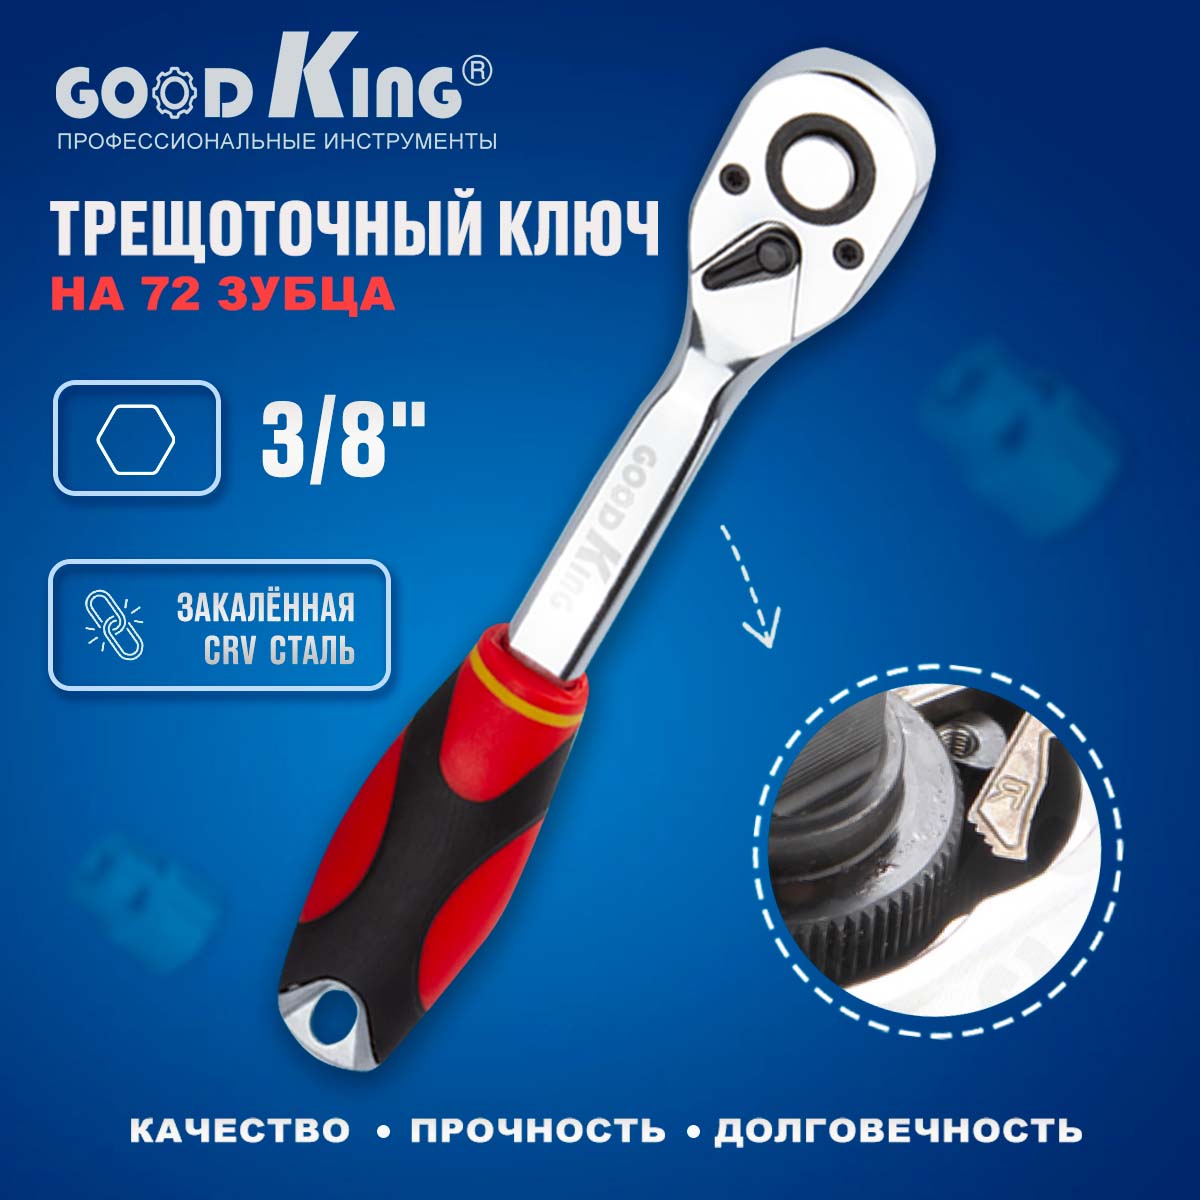 Трещотка 3/8 72 зубца GoodKing T-103872 ключ трещоточный, для ремонта, для авто мотыжка комбинированная длина 40 см 3 зубца